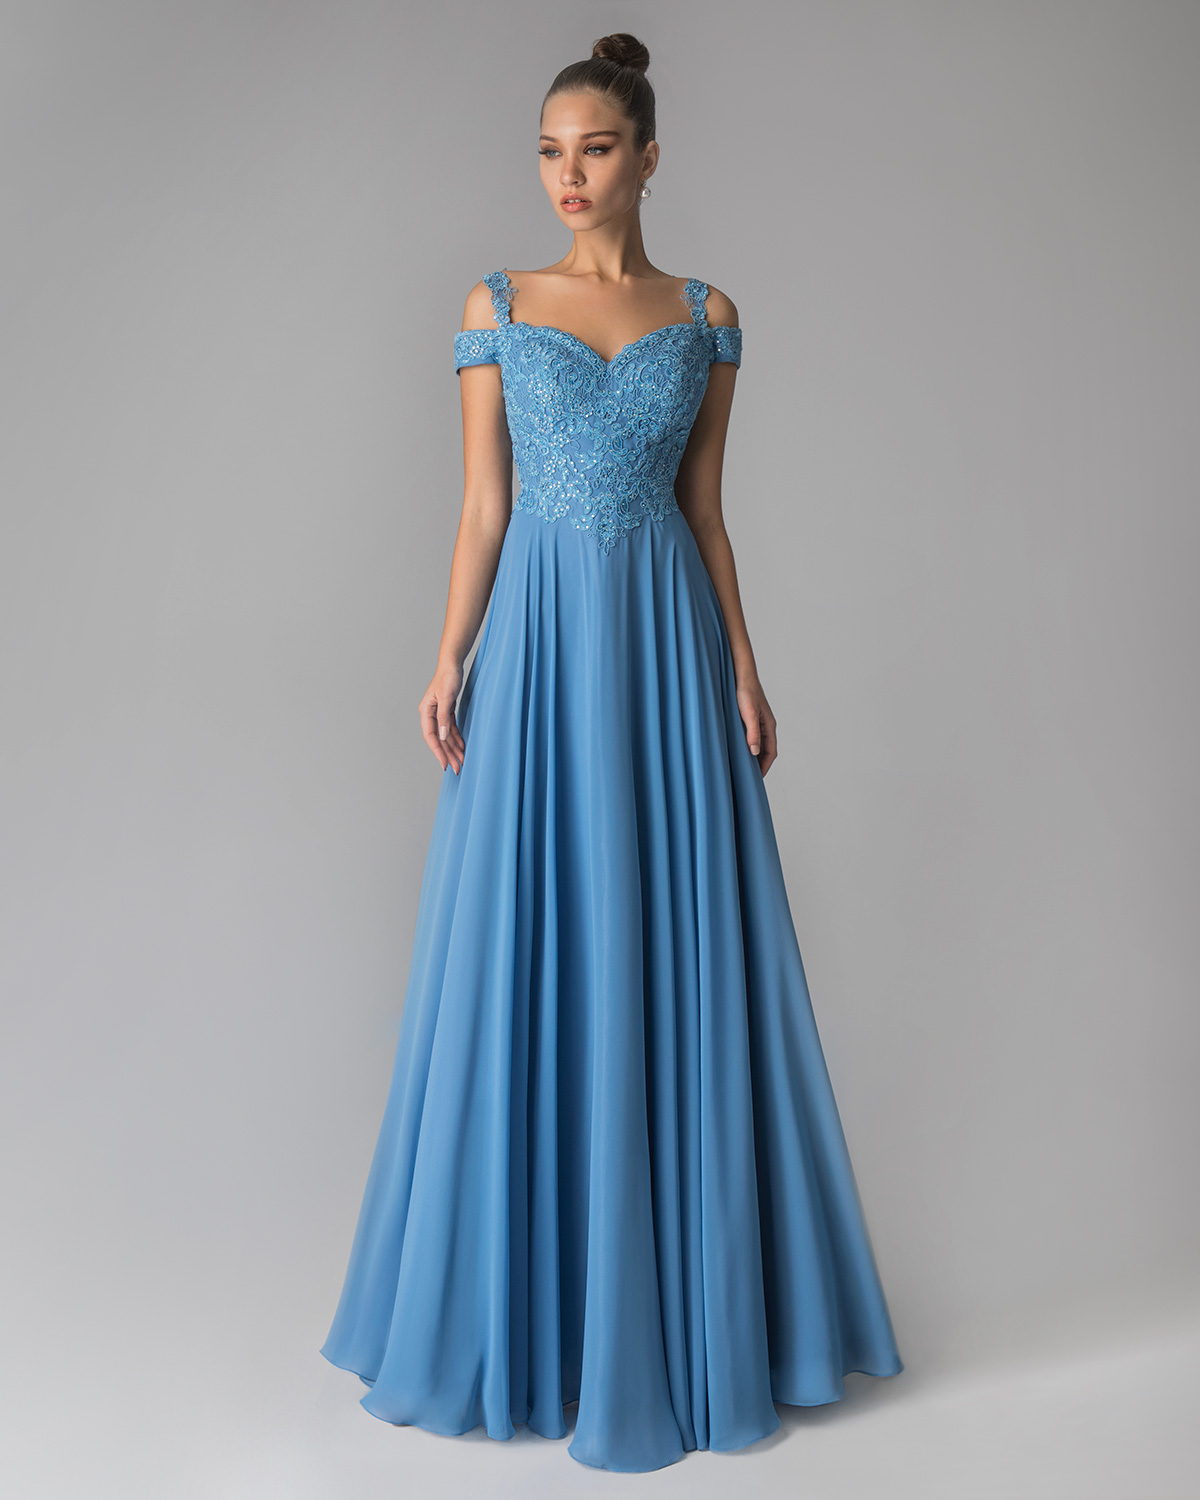 Классические платья / Long evening dress with applique lace and beaded top